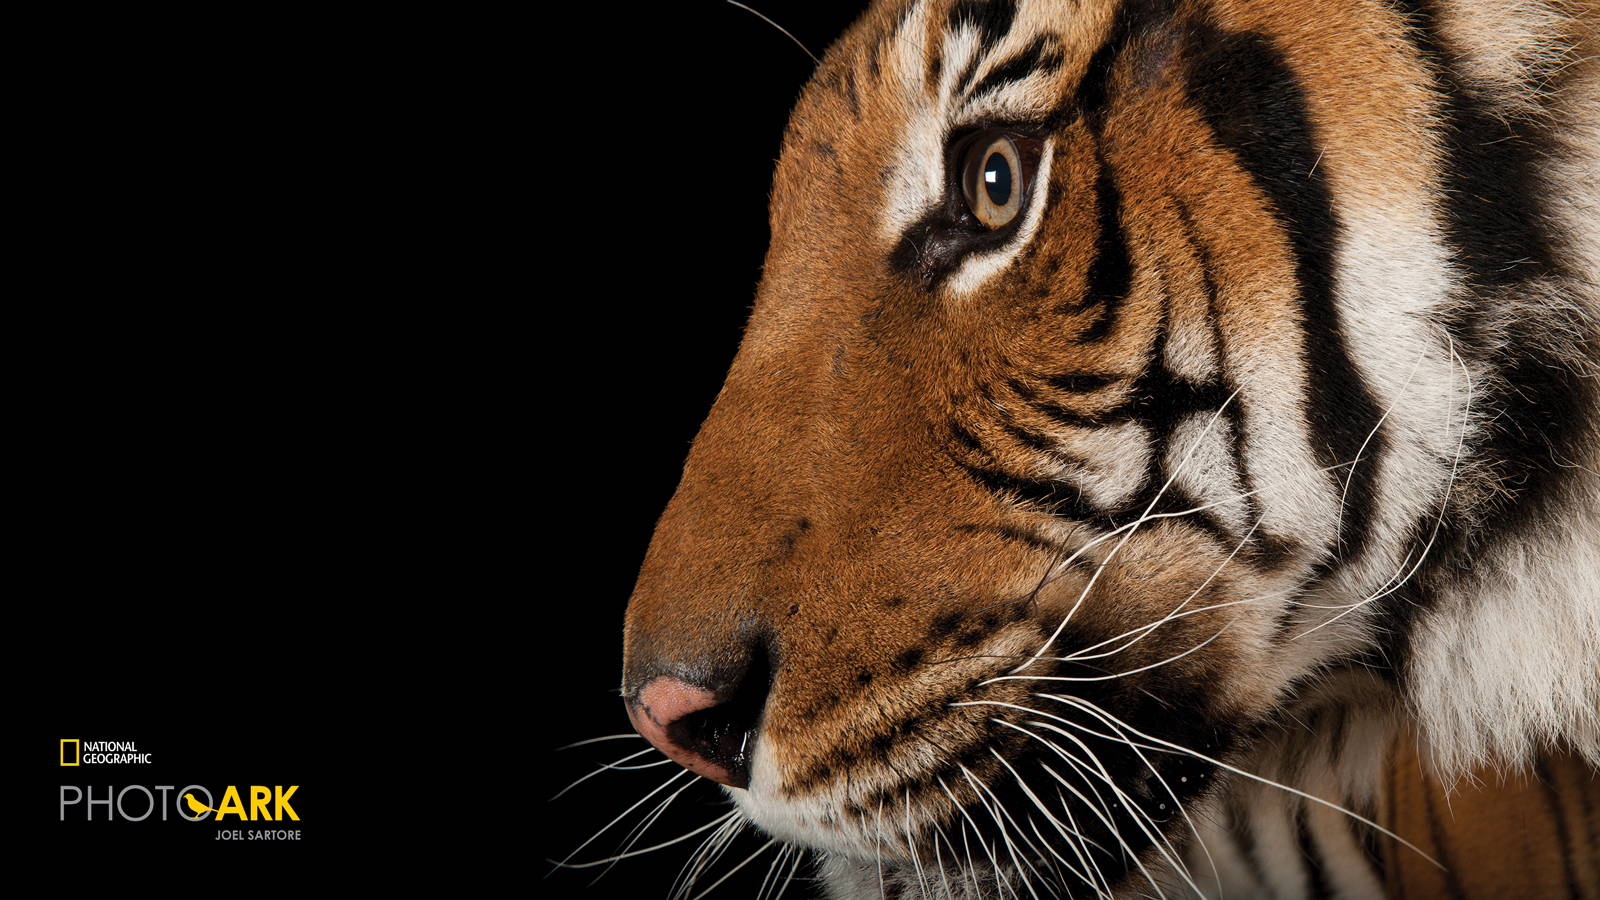 LOQI Grocery Shopping Tote Bag Reusable NATIONAL GEOGRAPHIC Malayan Tiger Animal 